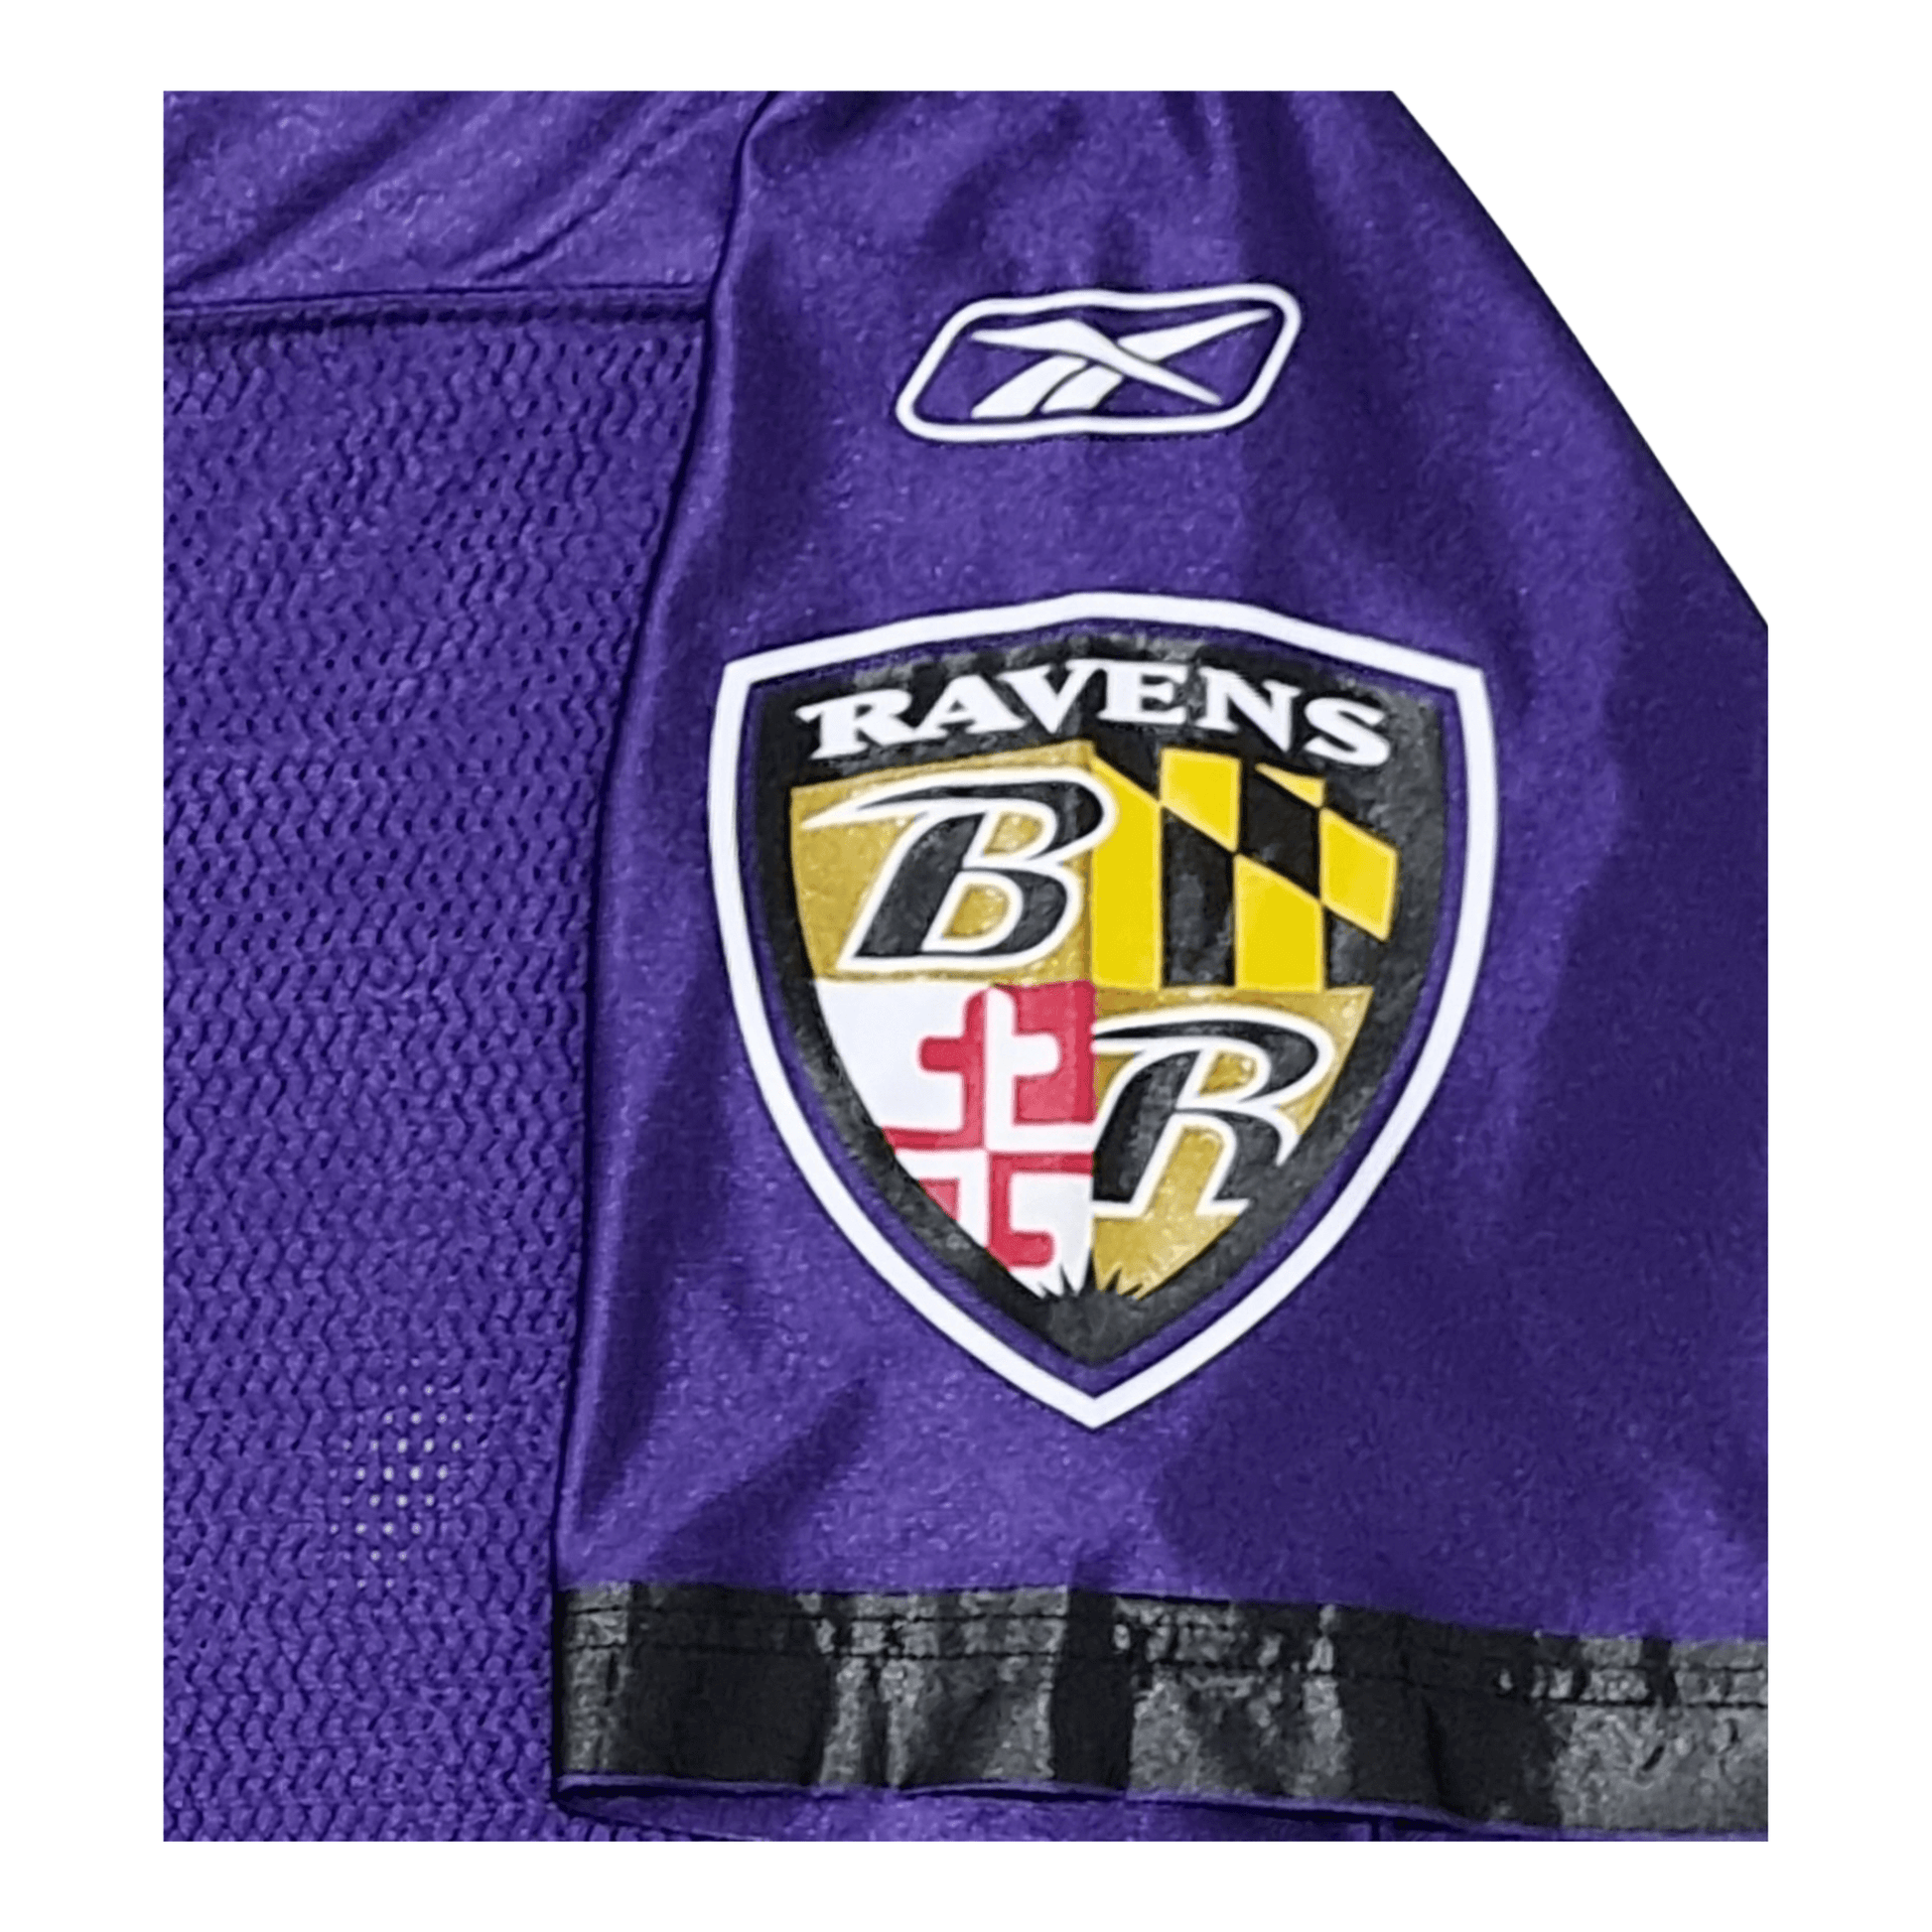 Baltimore Ravens Jersey - Joe Flacco - front